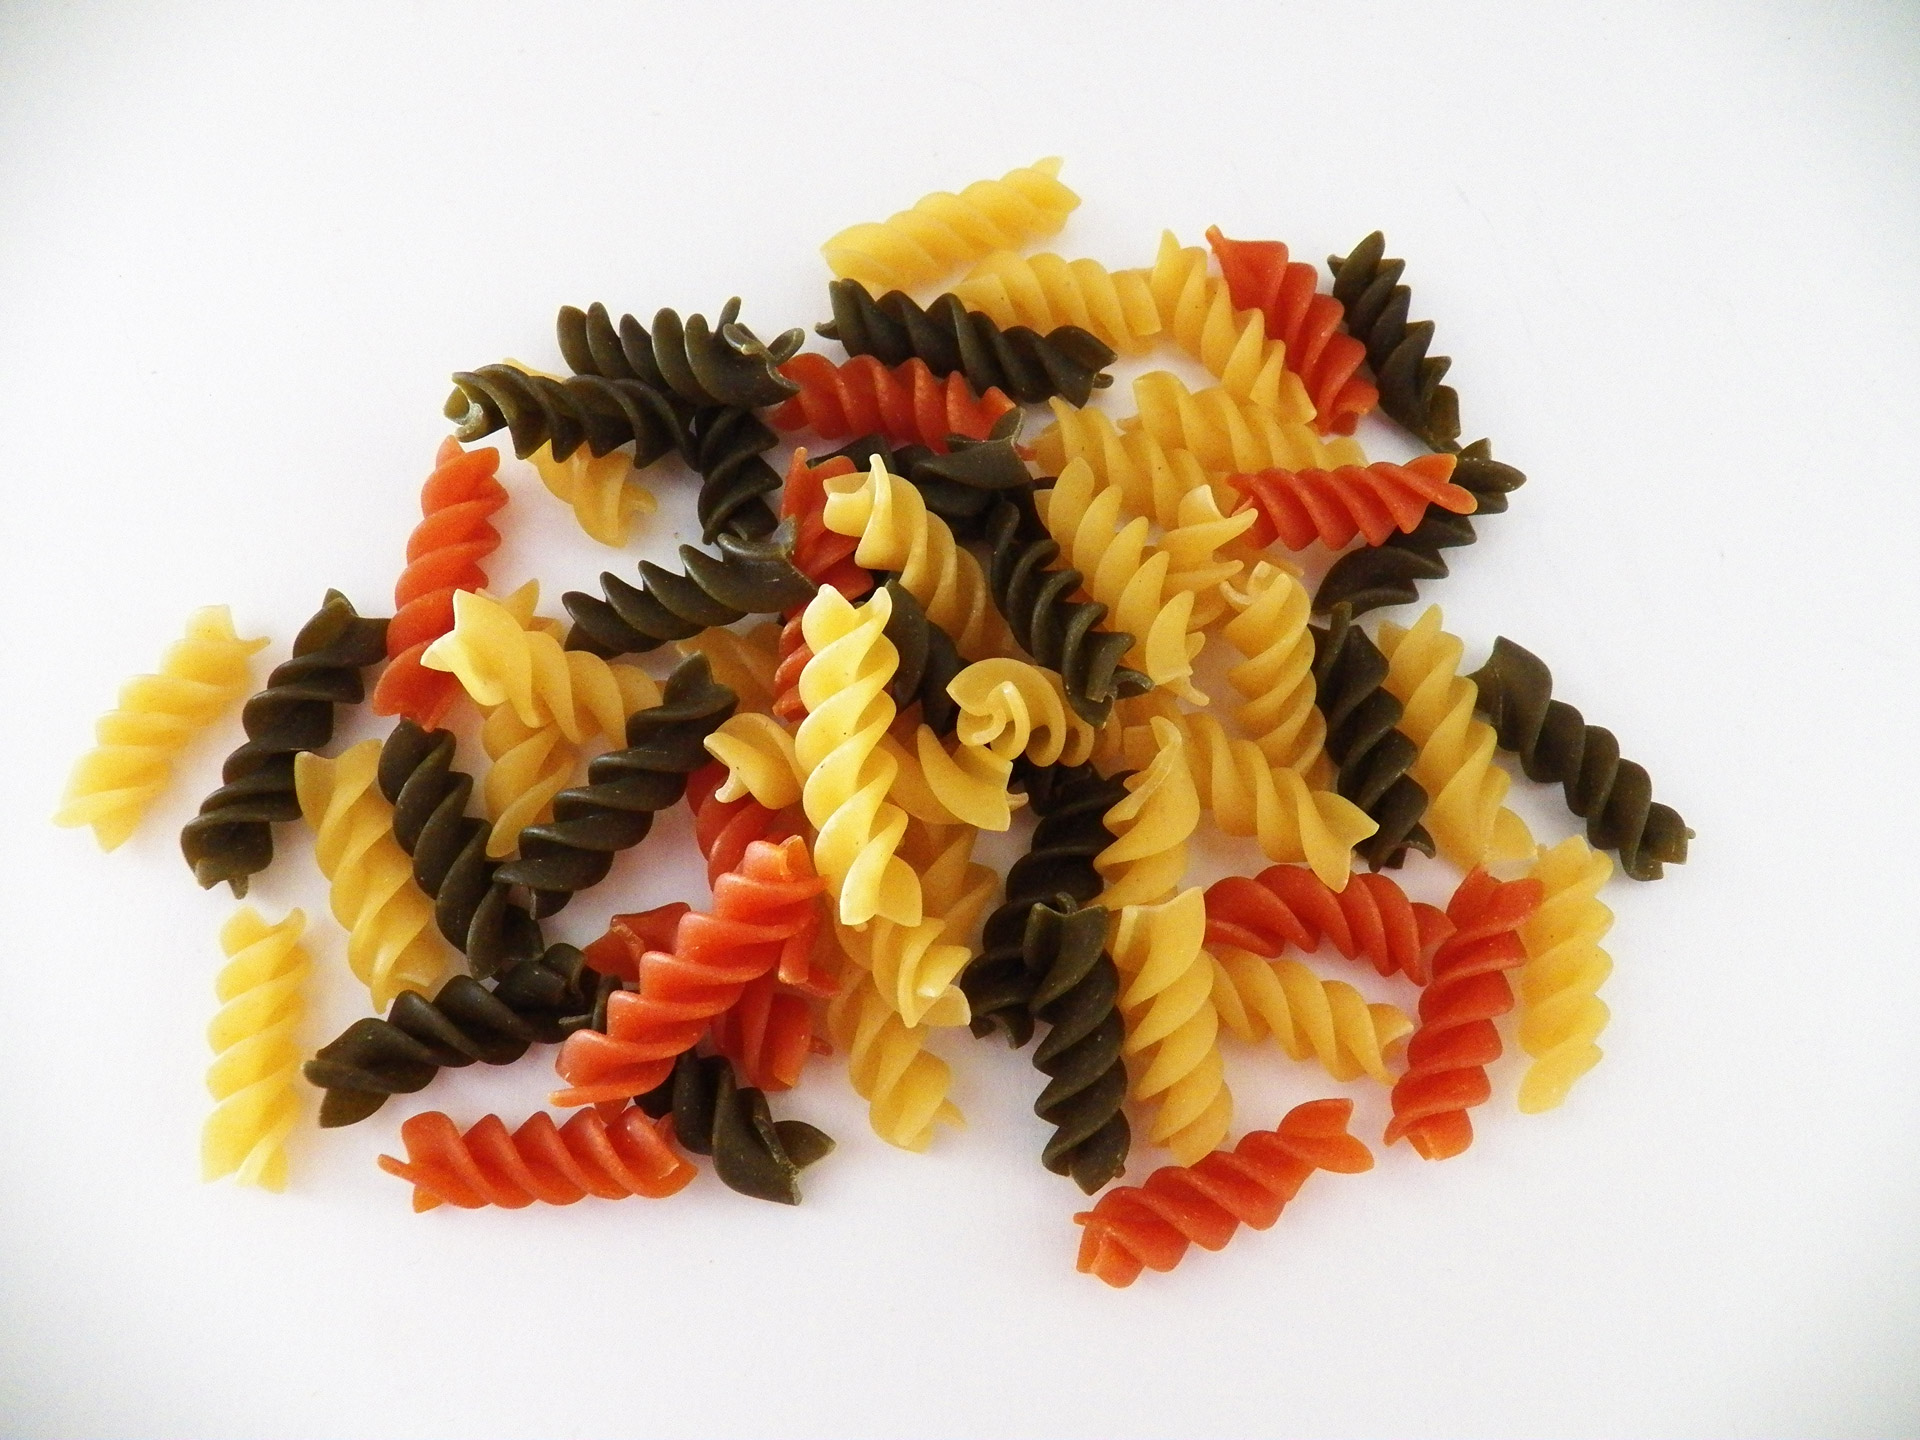 photo of colored pasta